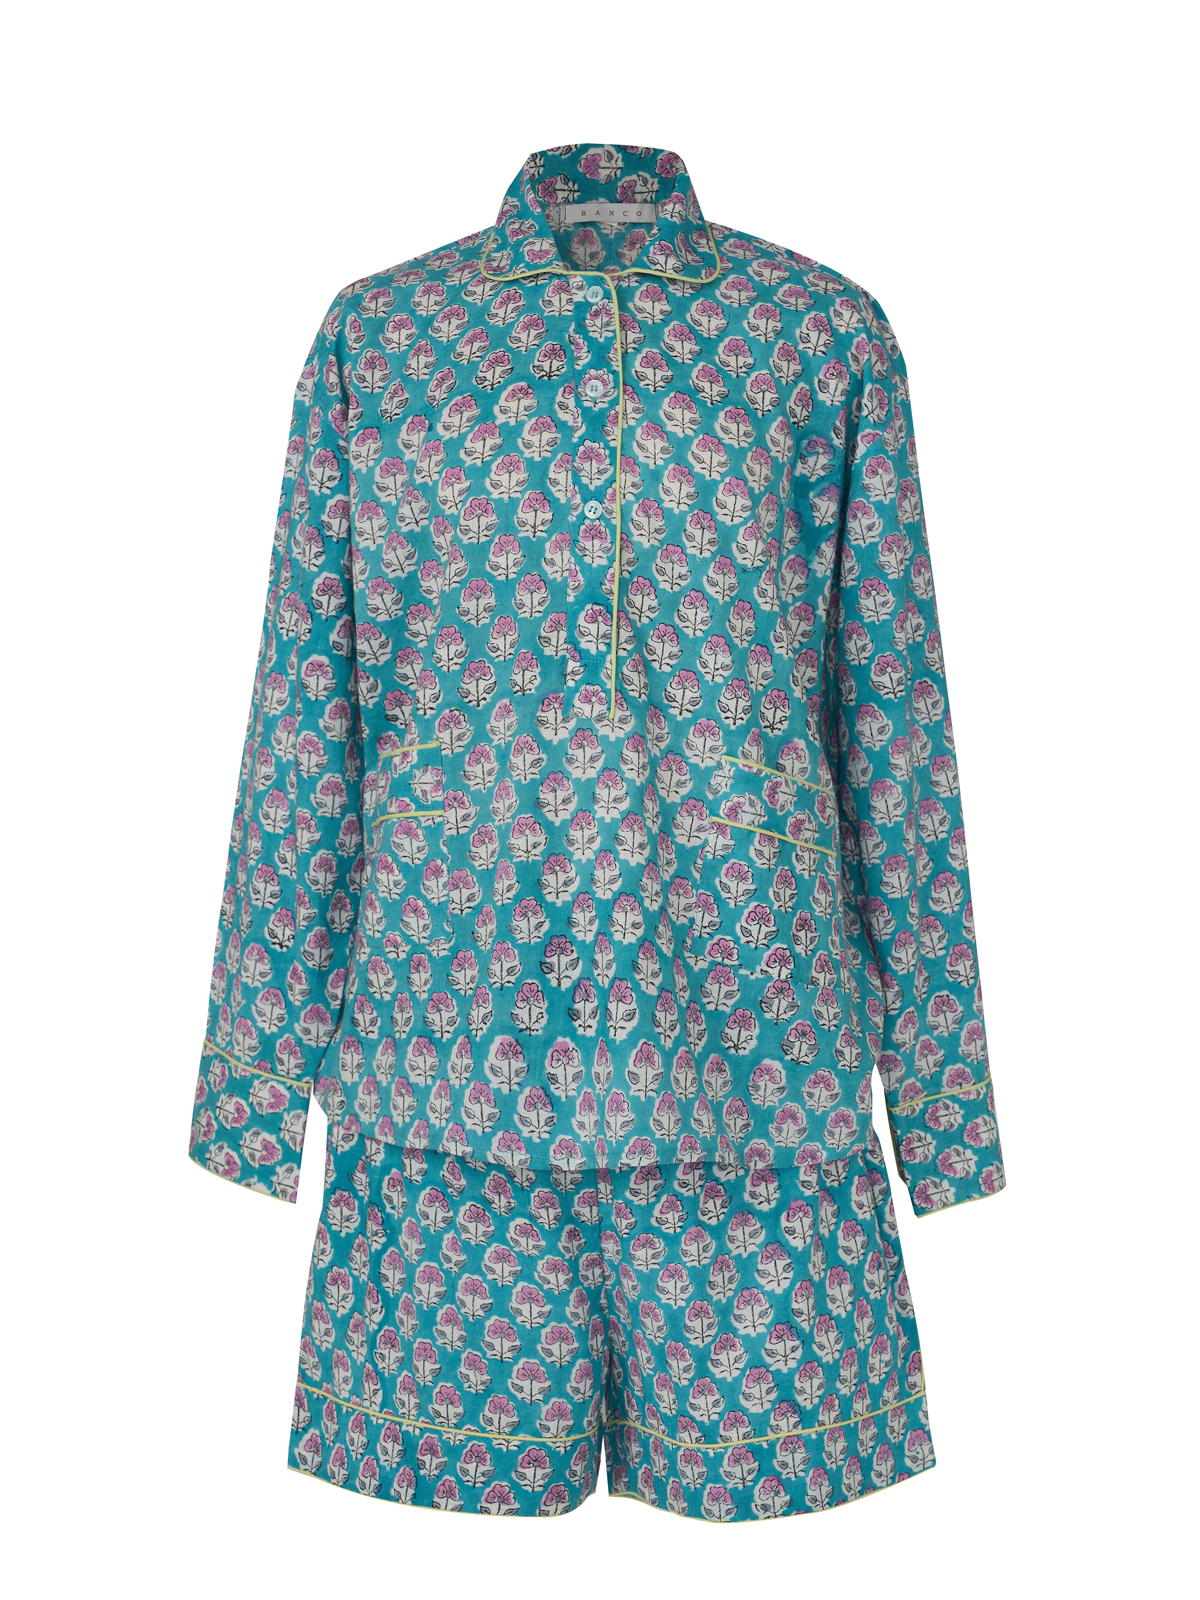 Snug Green (Pajama) 1장 구매시 7%,2장 이상 구매시 15% 쿠폰할인